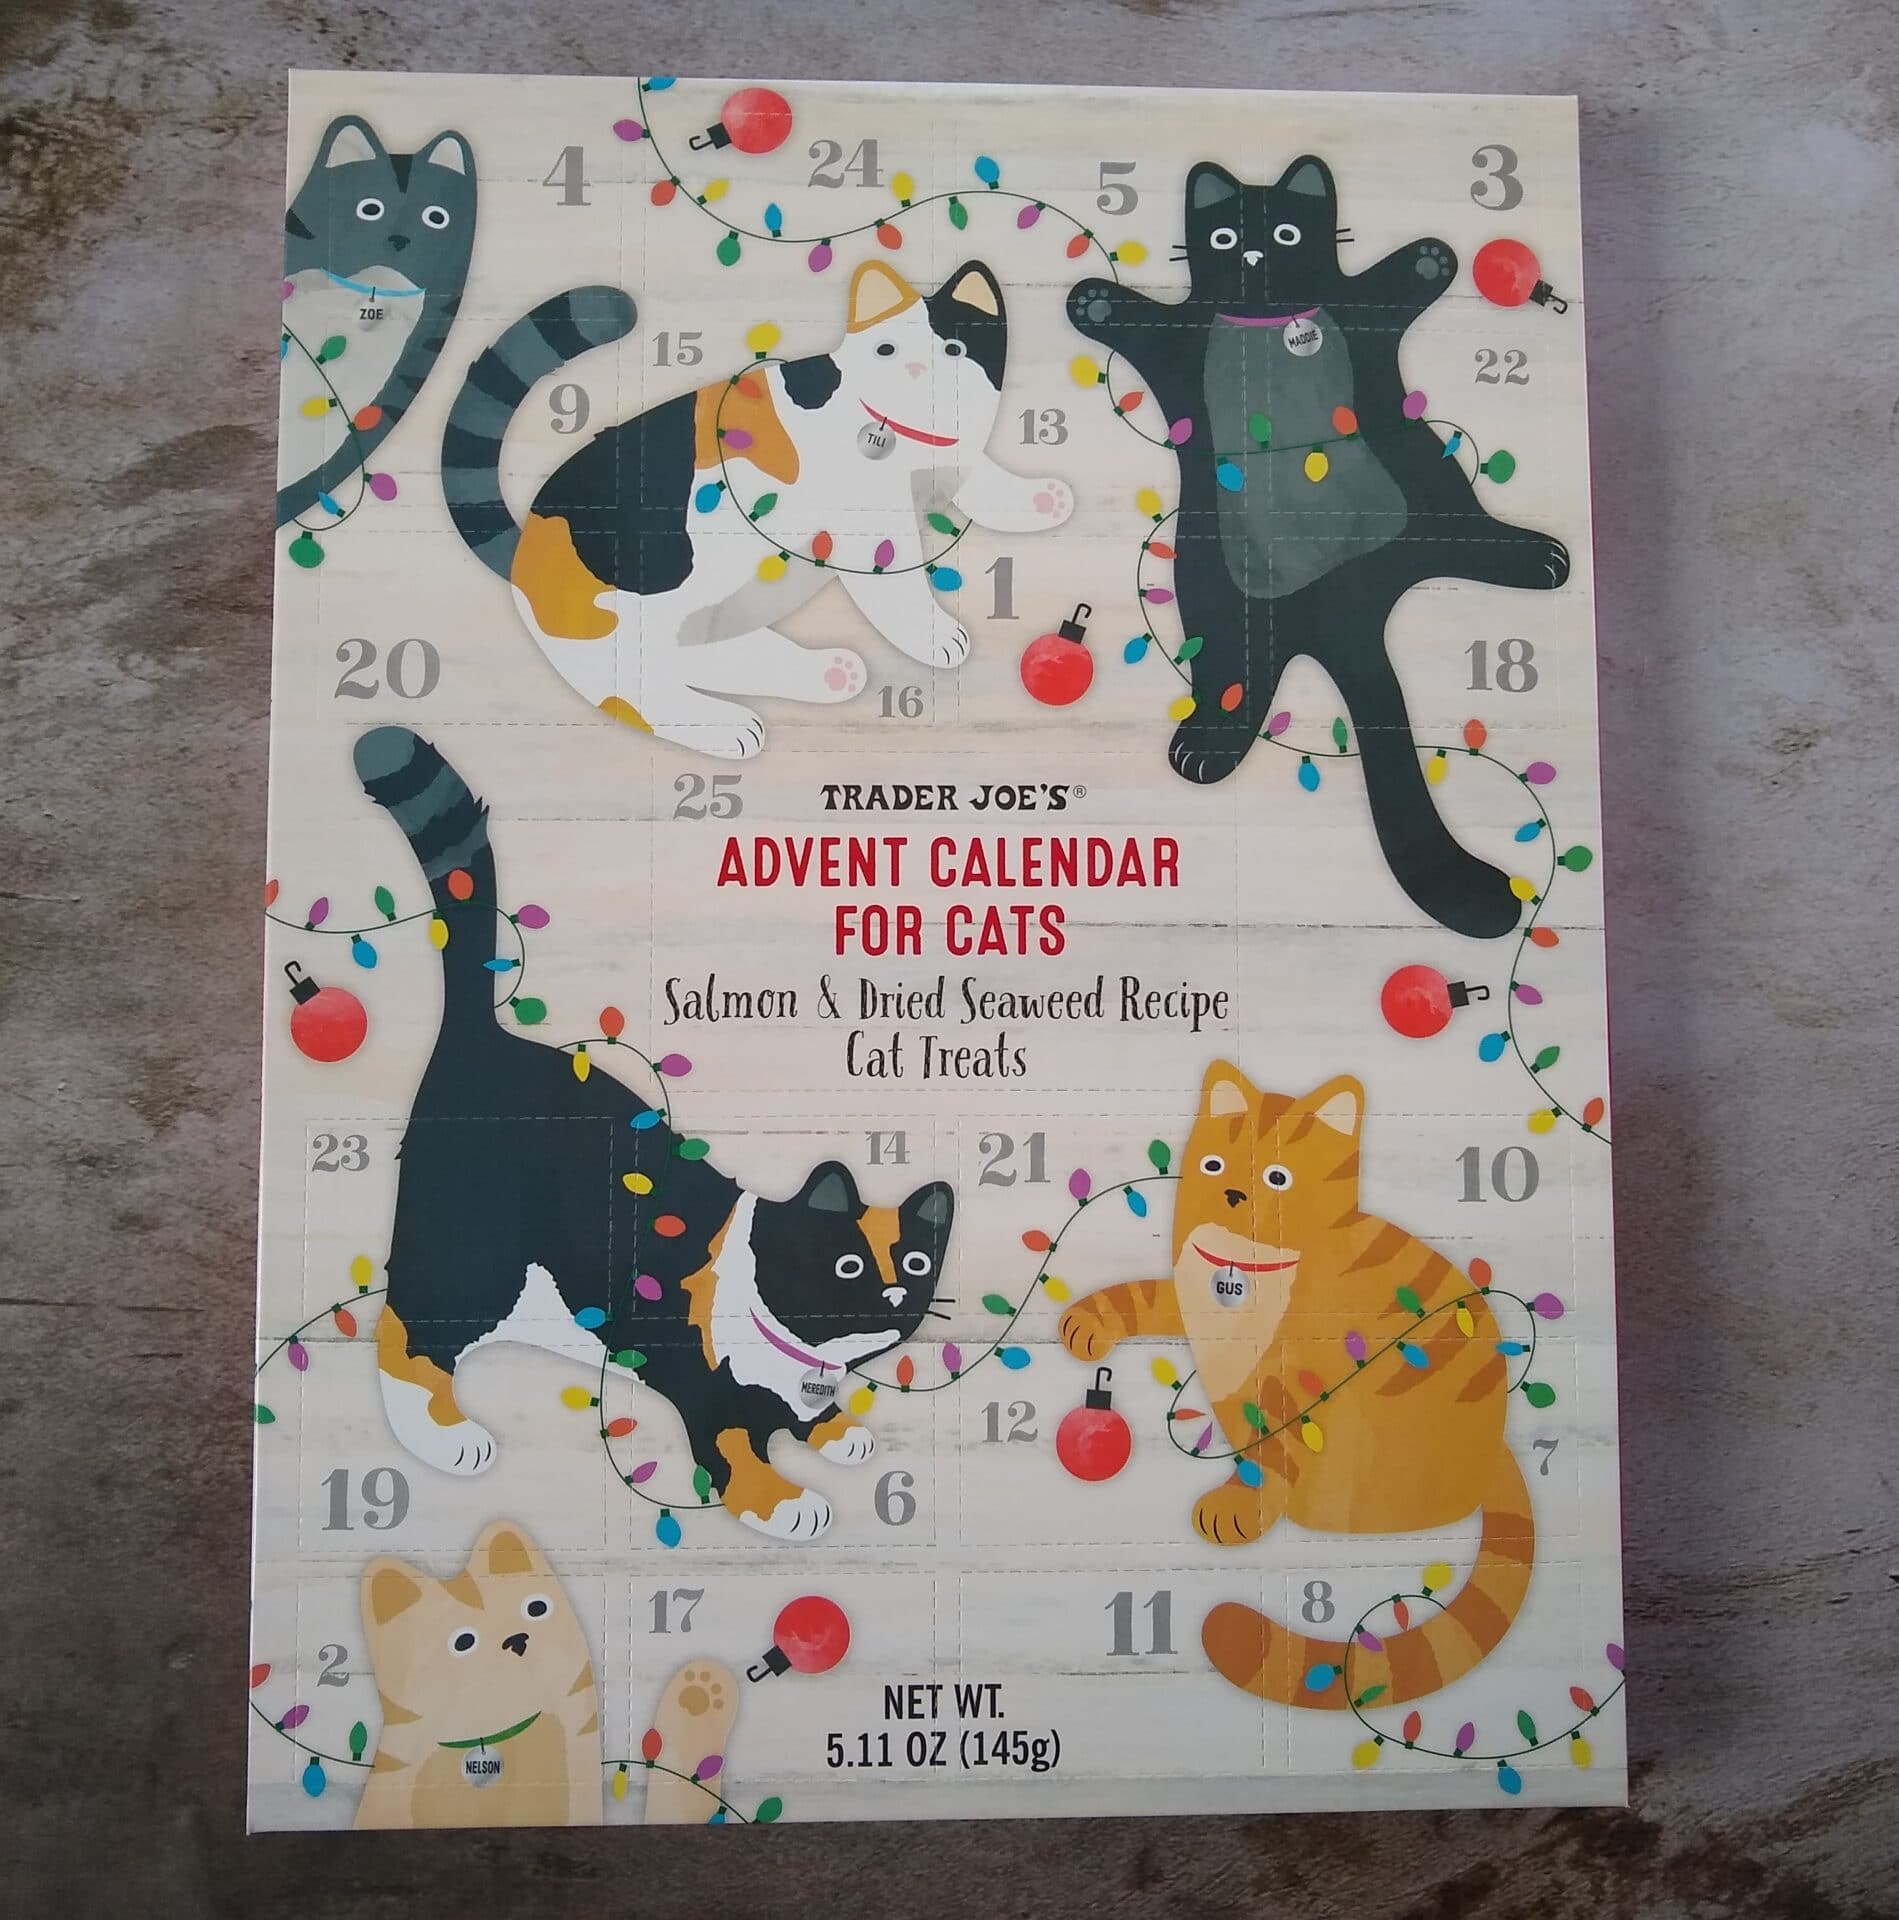 Trader Joe's Advent Calendar for Cats